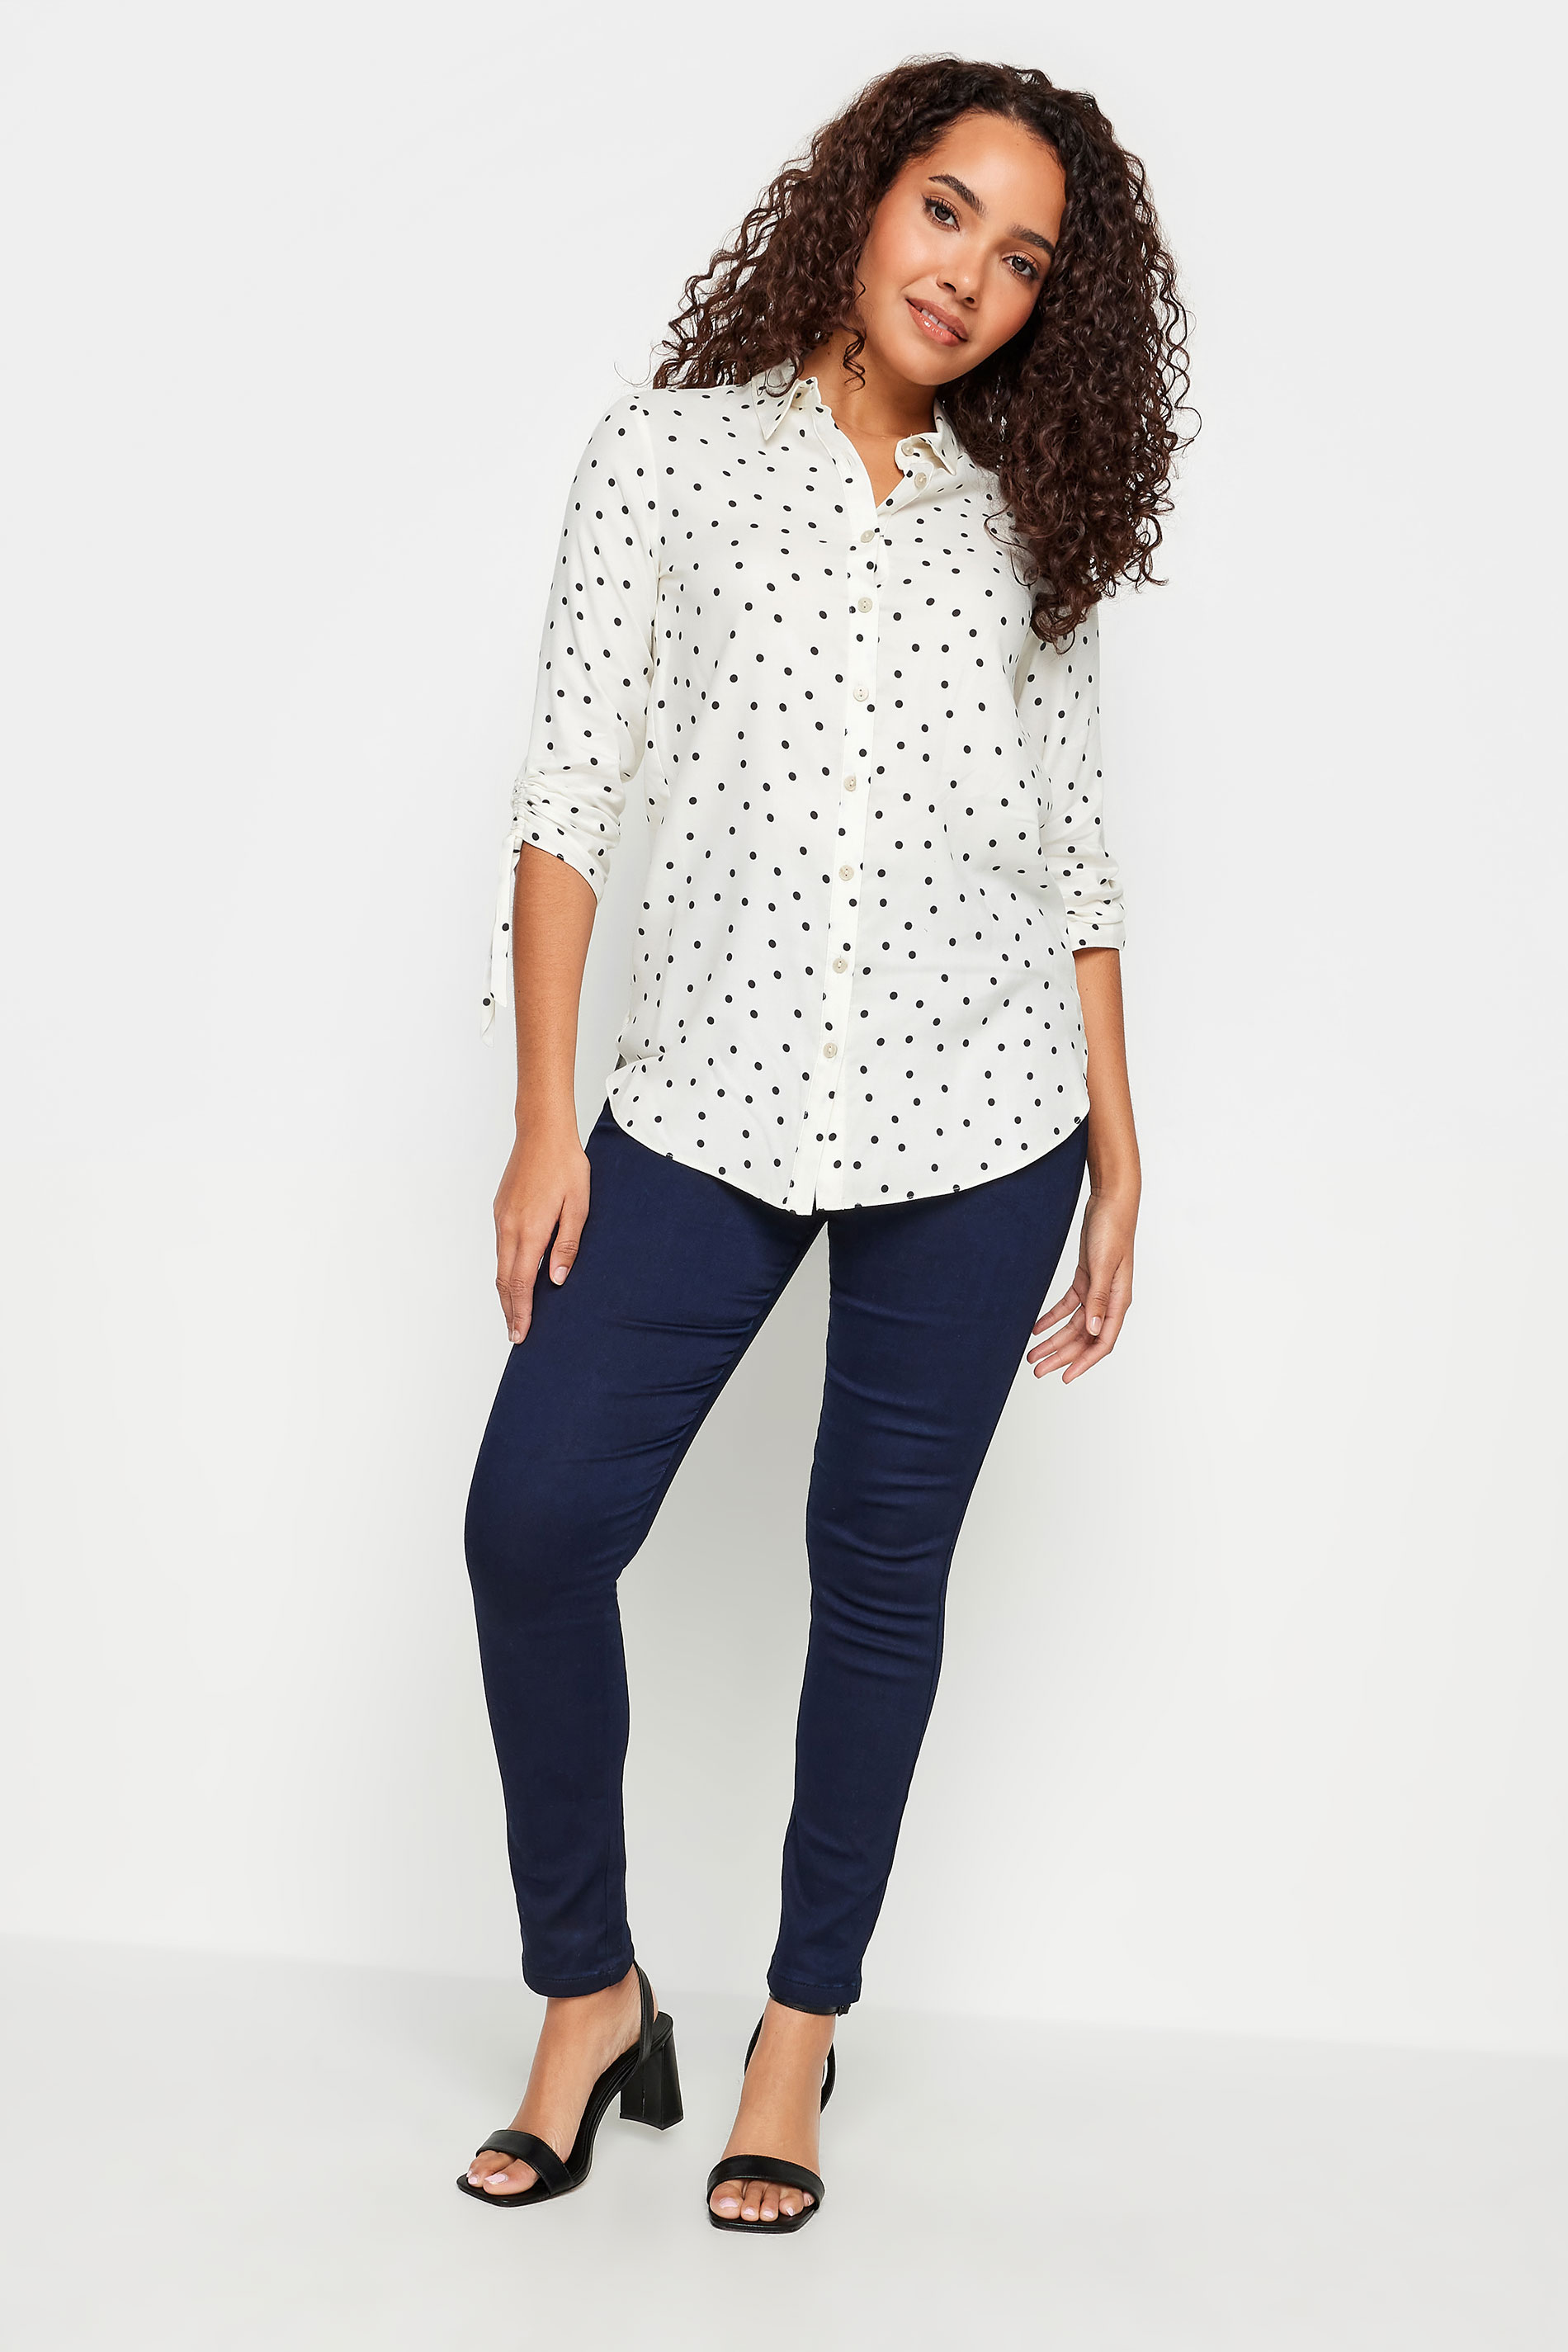 M&Co White Polka Dot Print Ruched Sleeve Shirt | M&Co